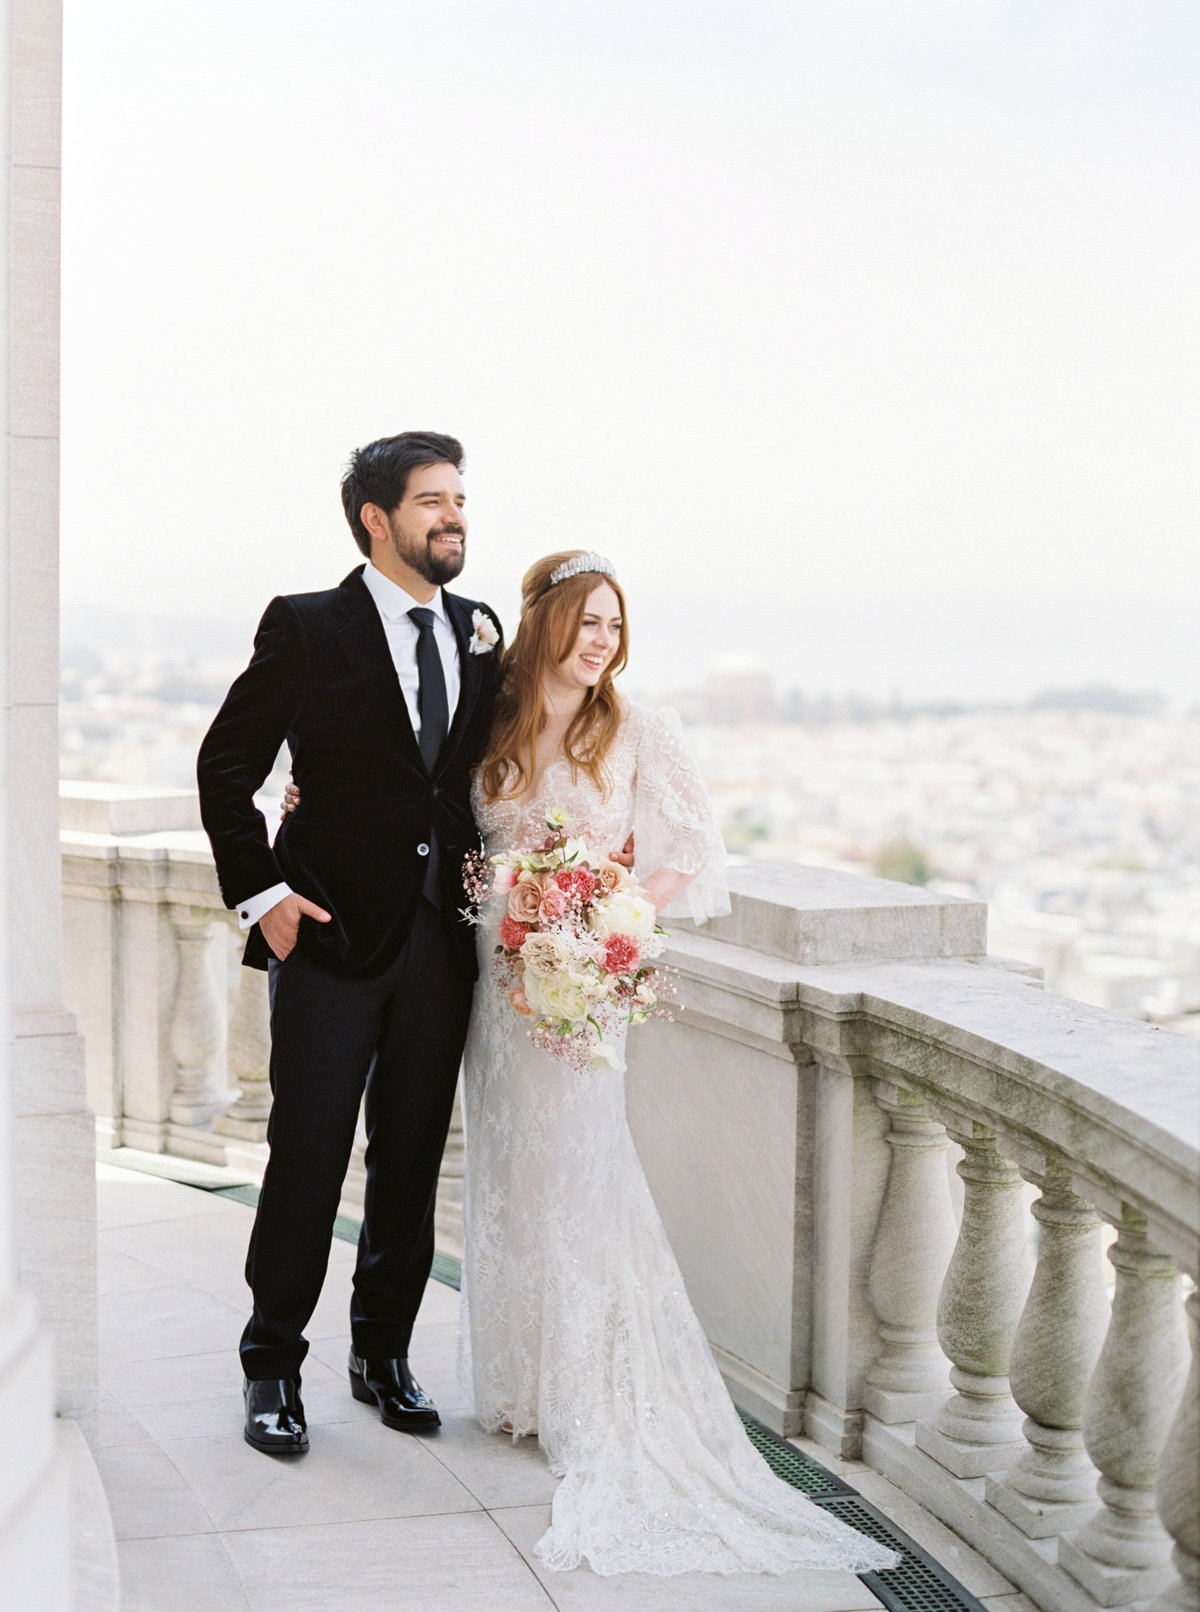 Jessica + Jesse Flood Mansion San Francisco Wedding Sneak Peeks | Cassie Valente Photography 0014